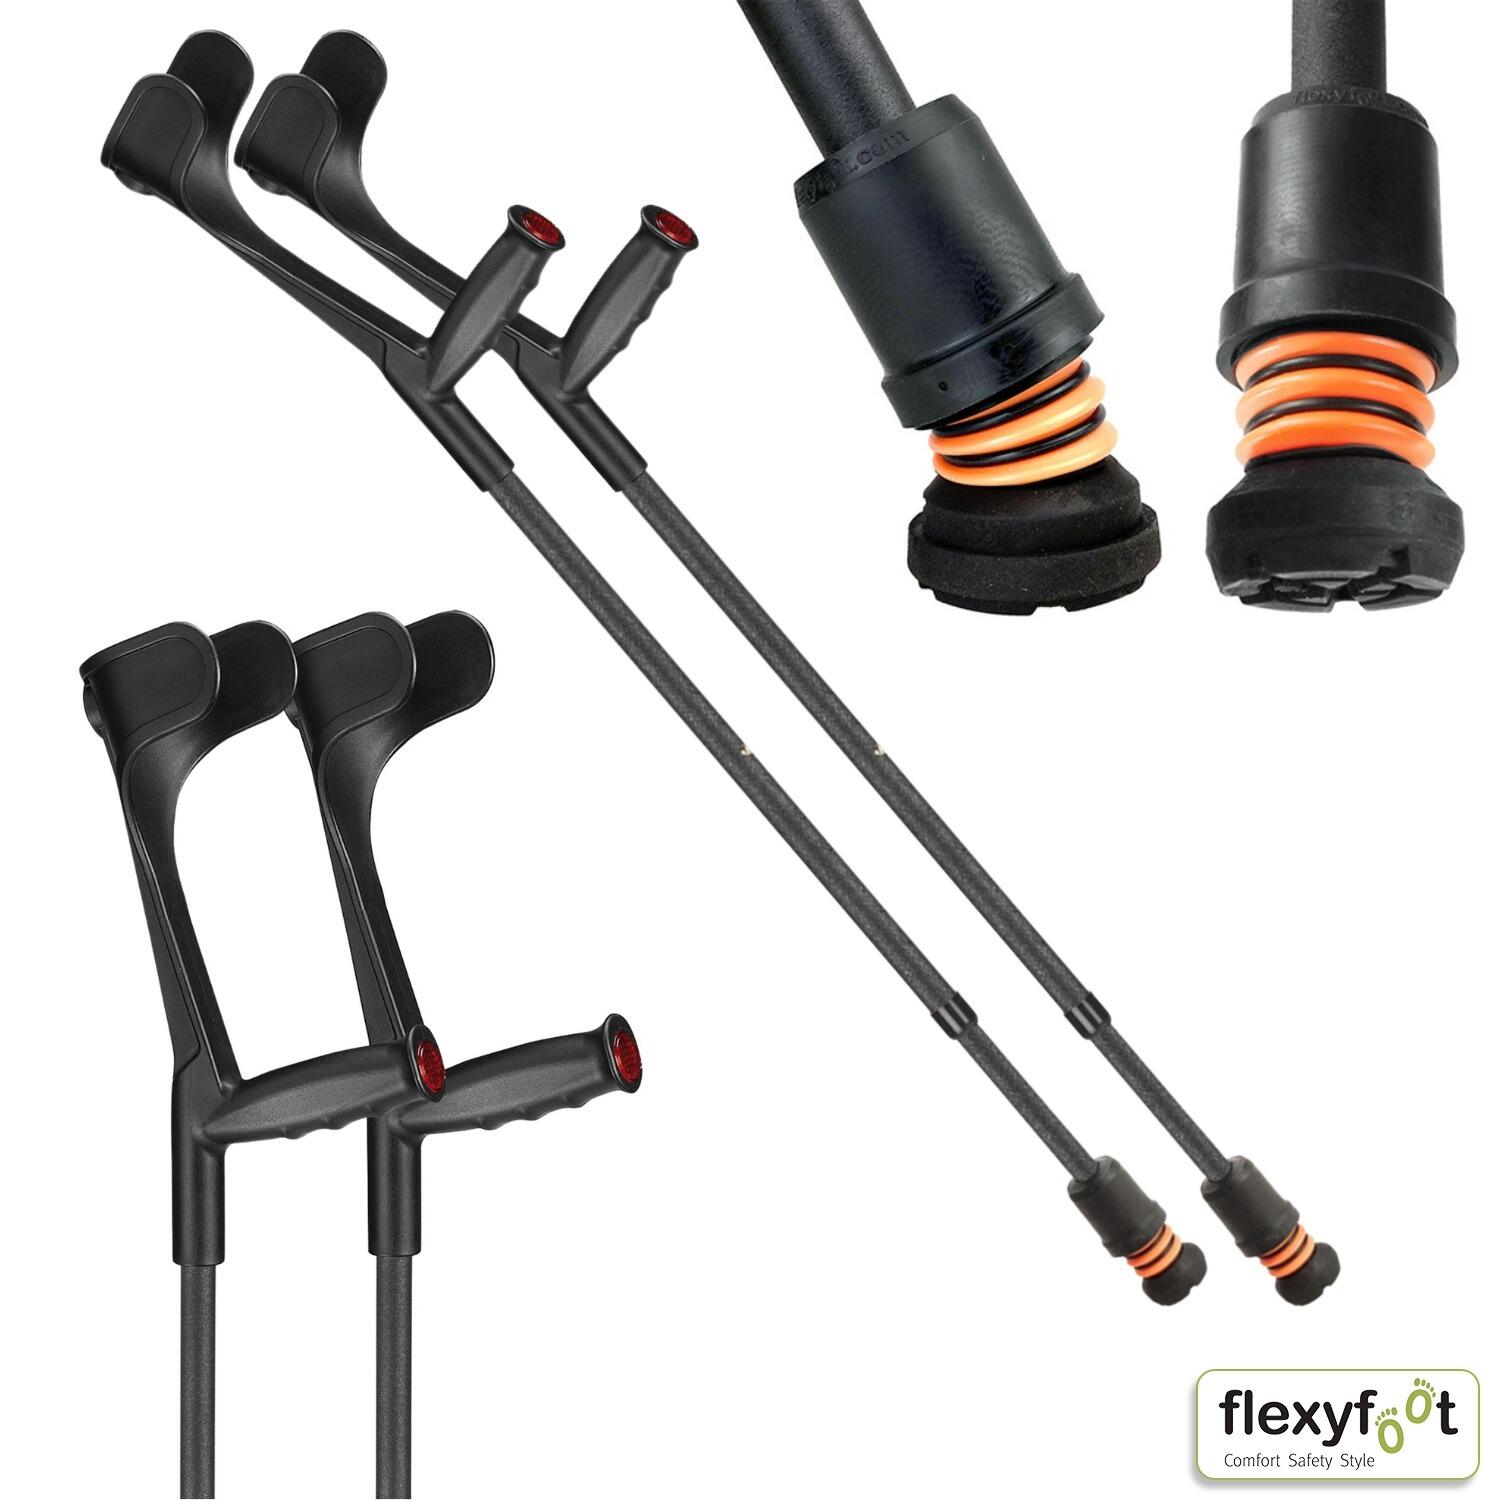 A pair of Textured black Flexyfoot Soft Grip Open Cuff Crutches